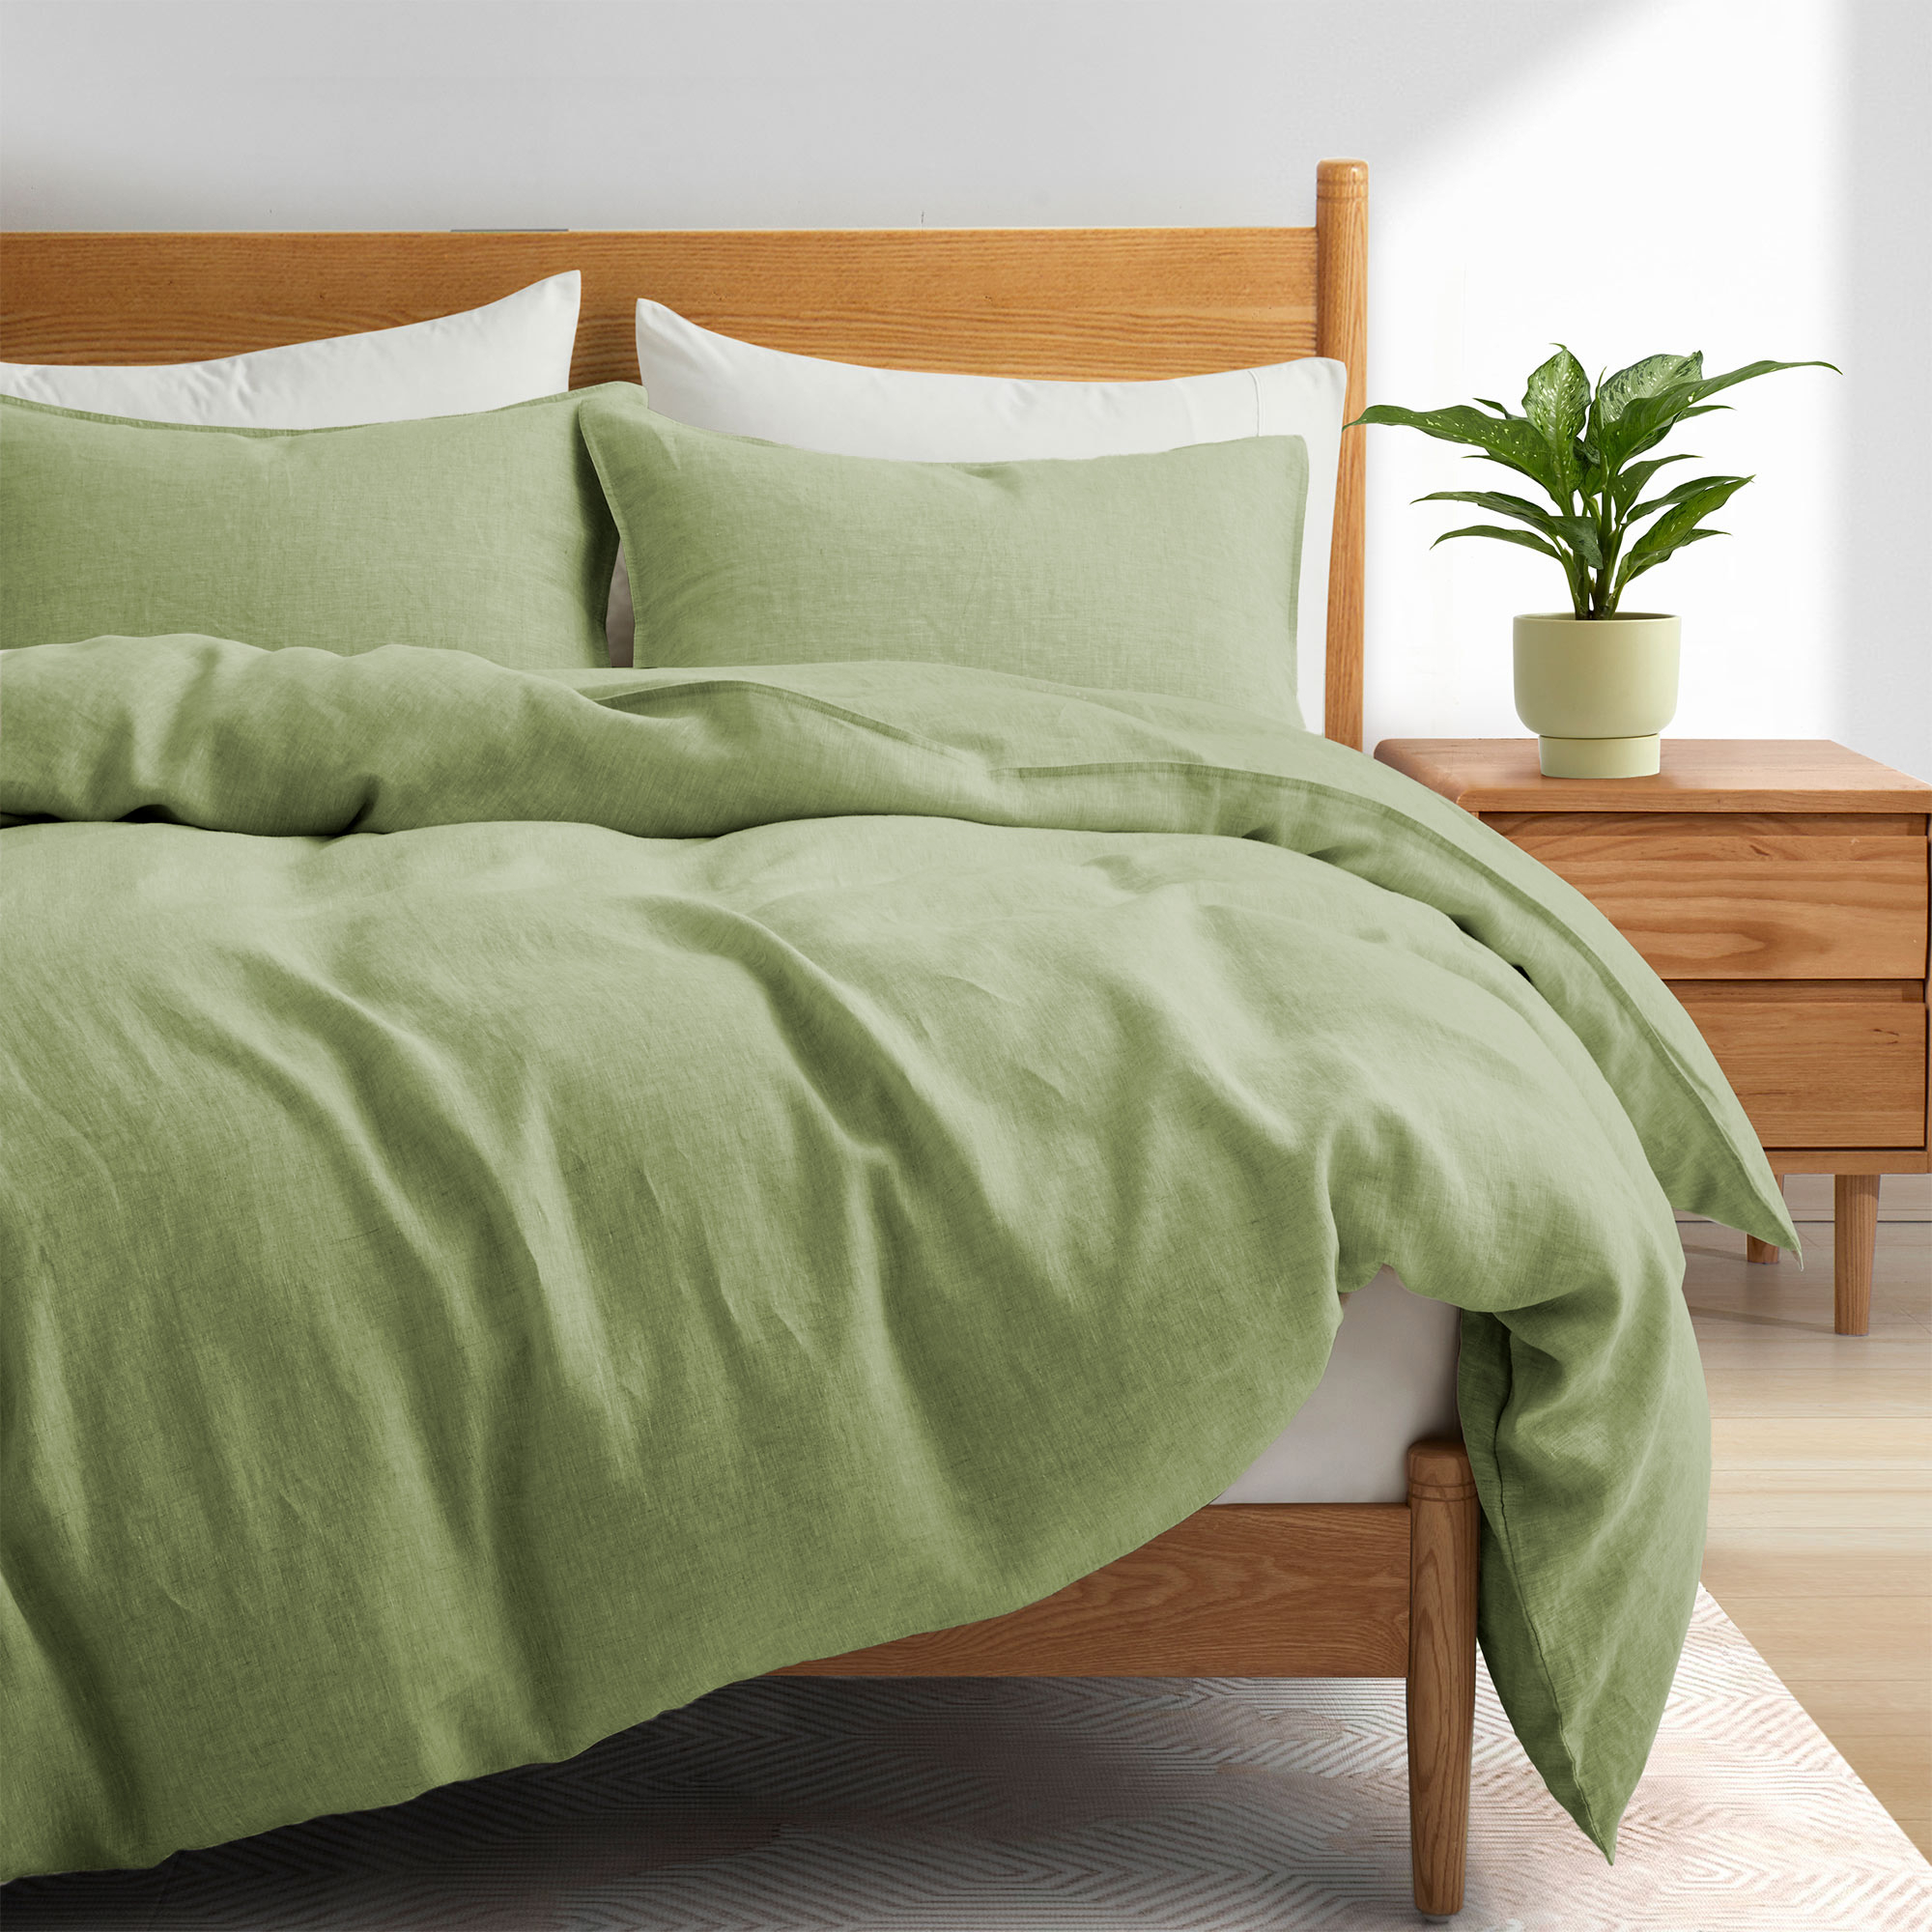 Premium Flax Linen Duvet Cover Set With Pillow Shams Breathable Moisture Wicking Bedding Set - Light Gray, Full/Queen